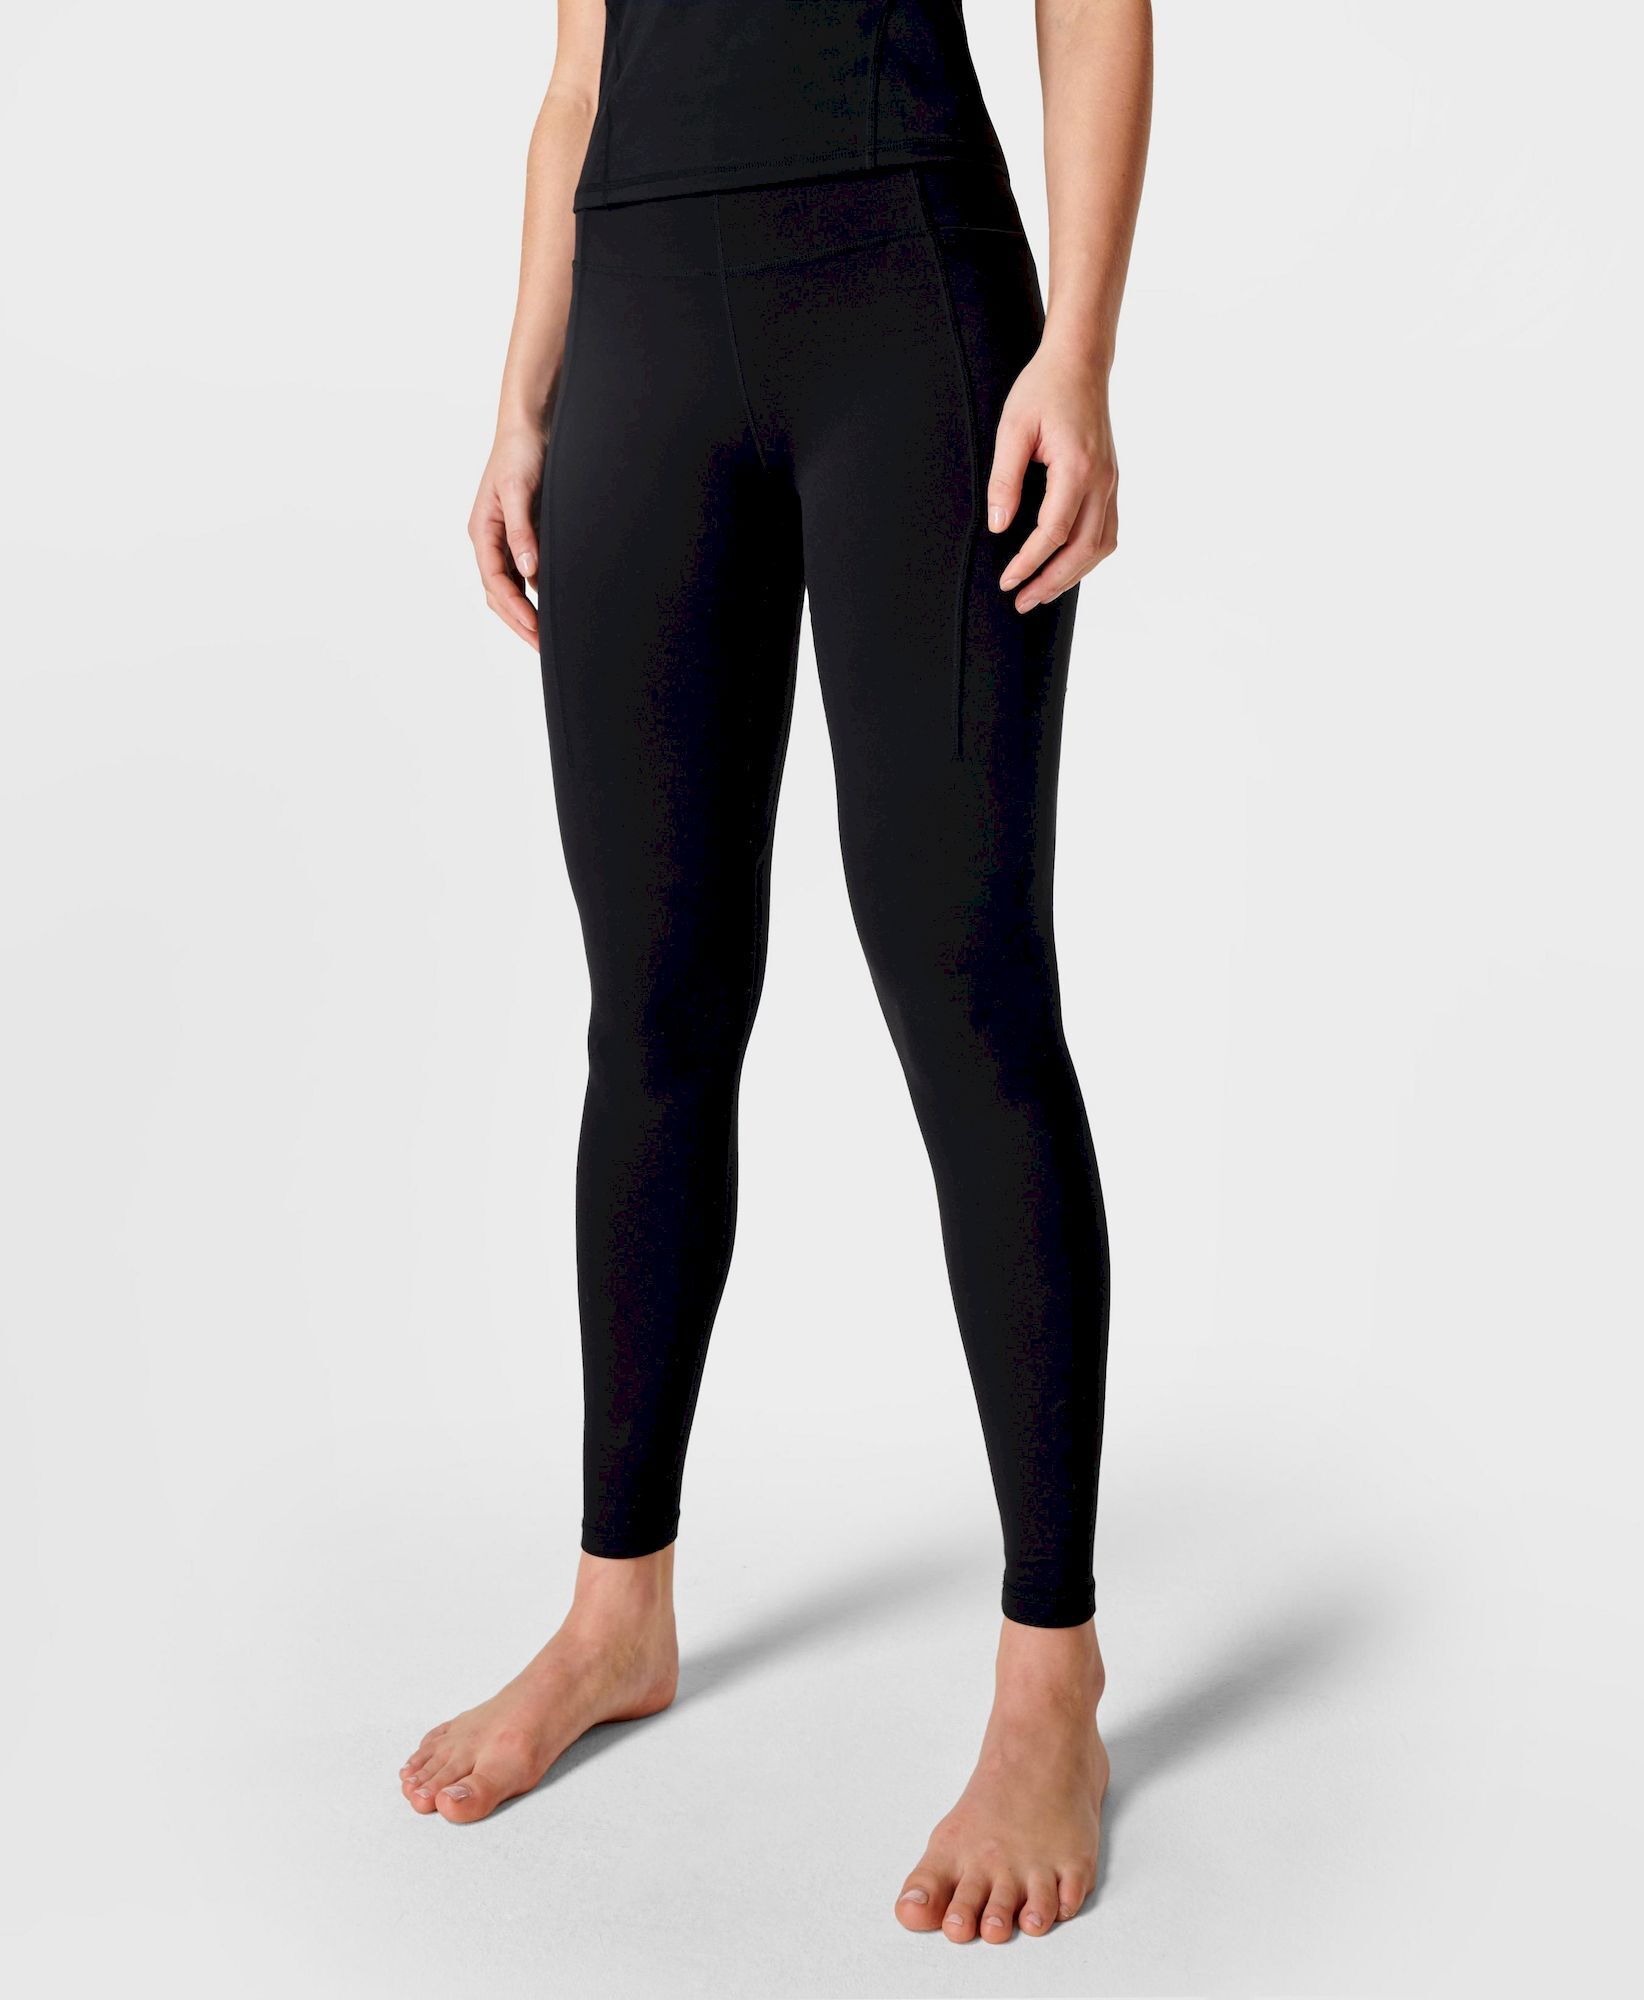 Sweaty Betty Super Soft Yoga Leggings - Legging yoga femme | Hardloop